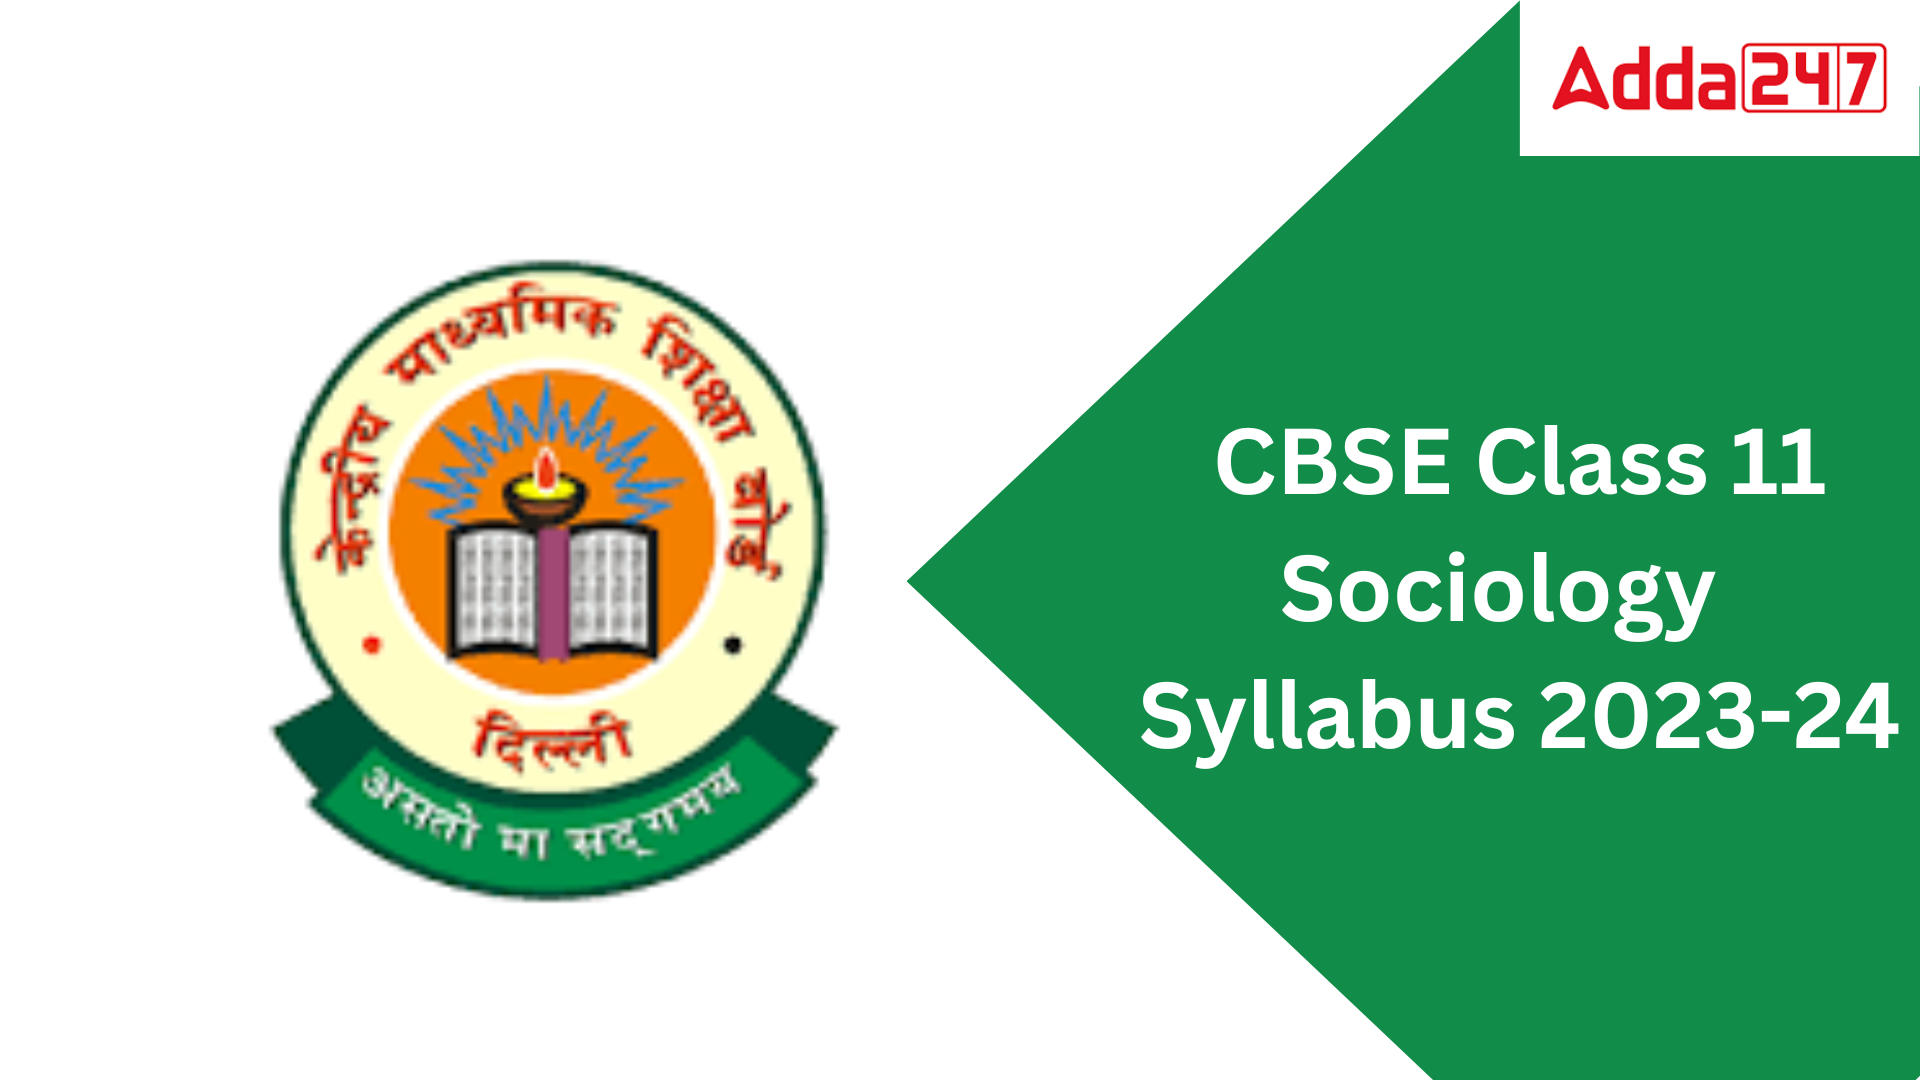 CBSE Class 11 Socioology Syllabus 2023-24